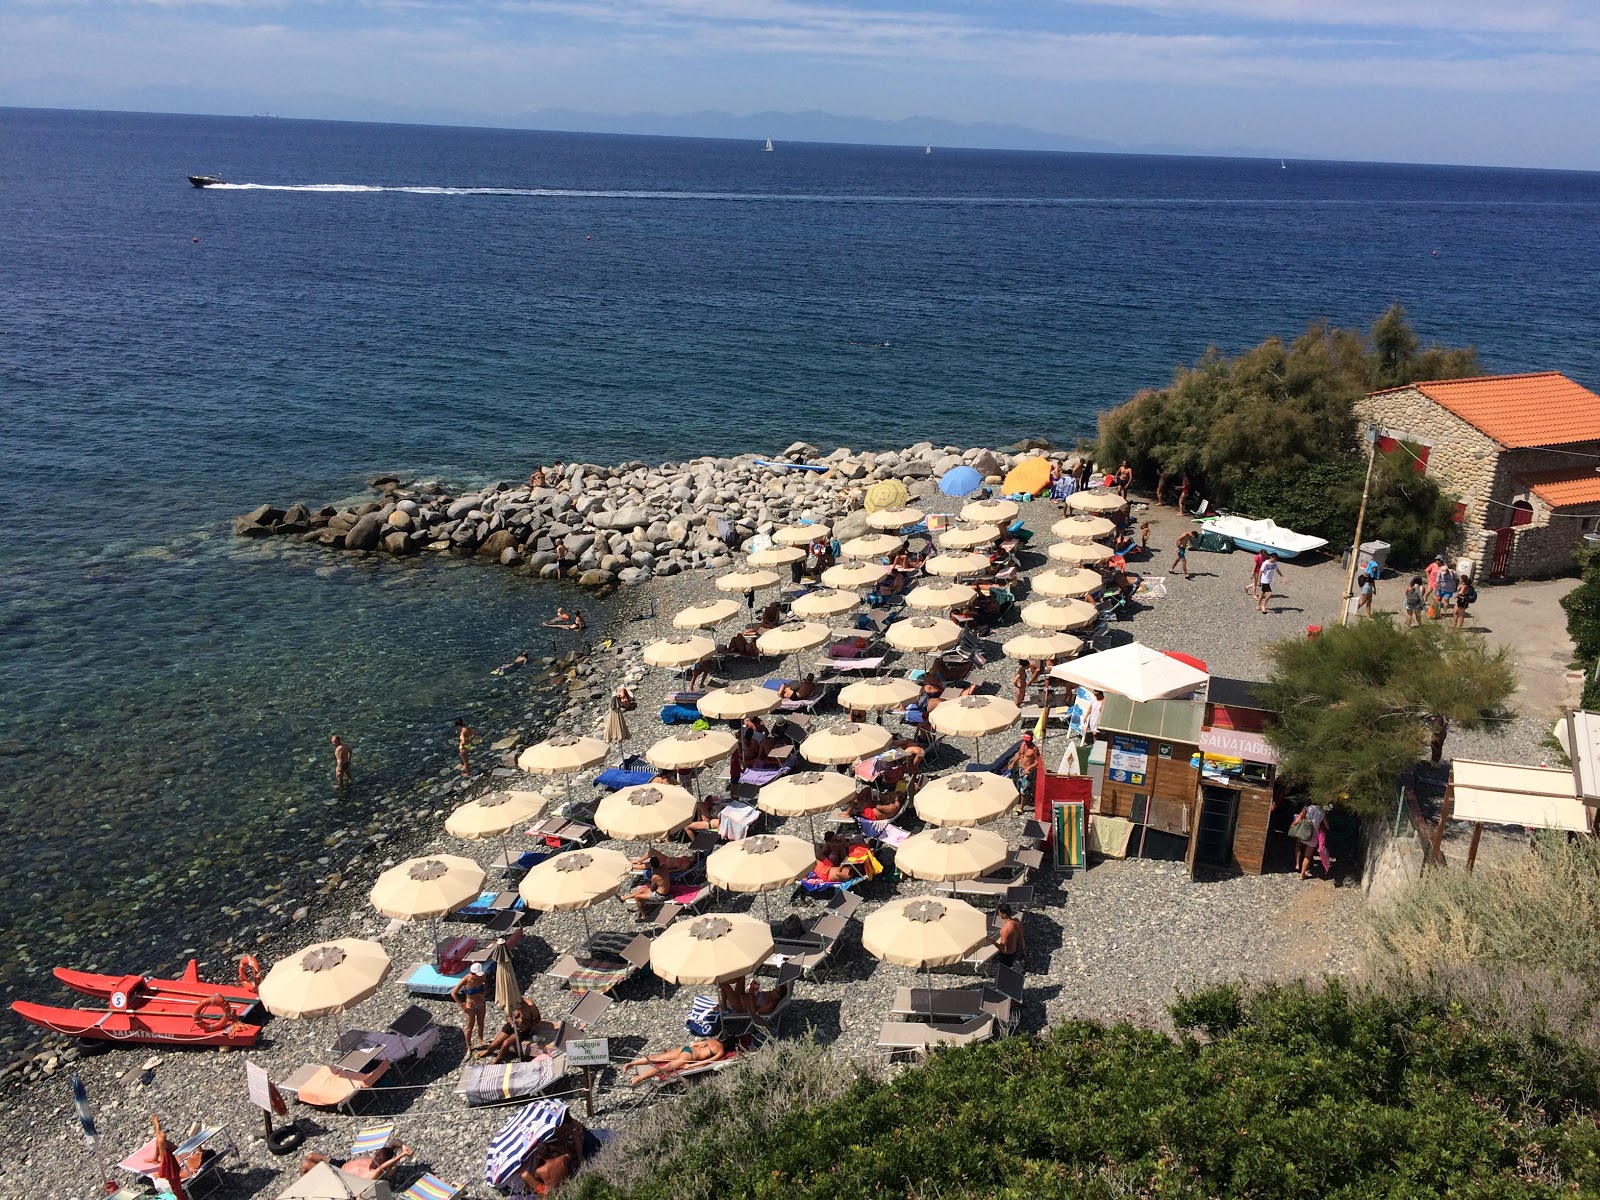 Photo of Spiaggia Del Relitto with rocks cover surface